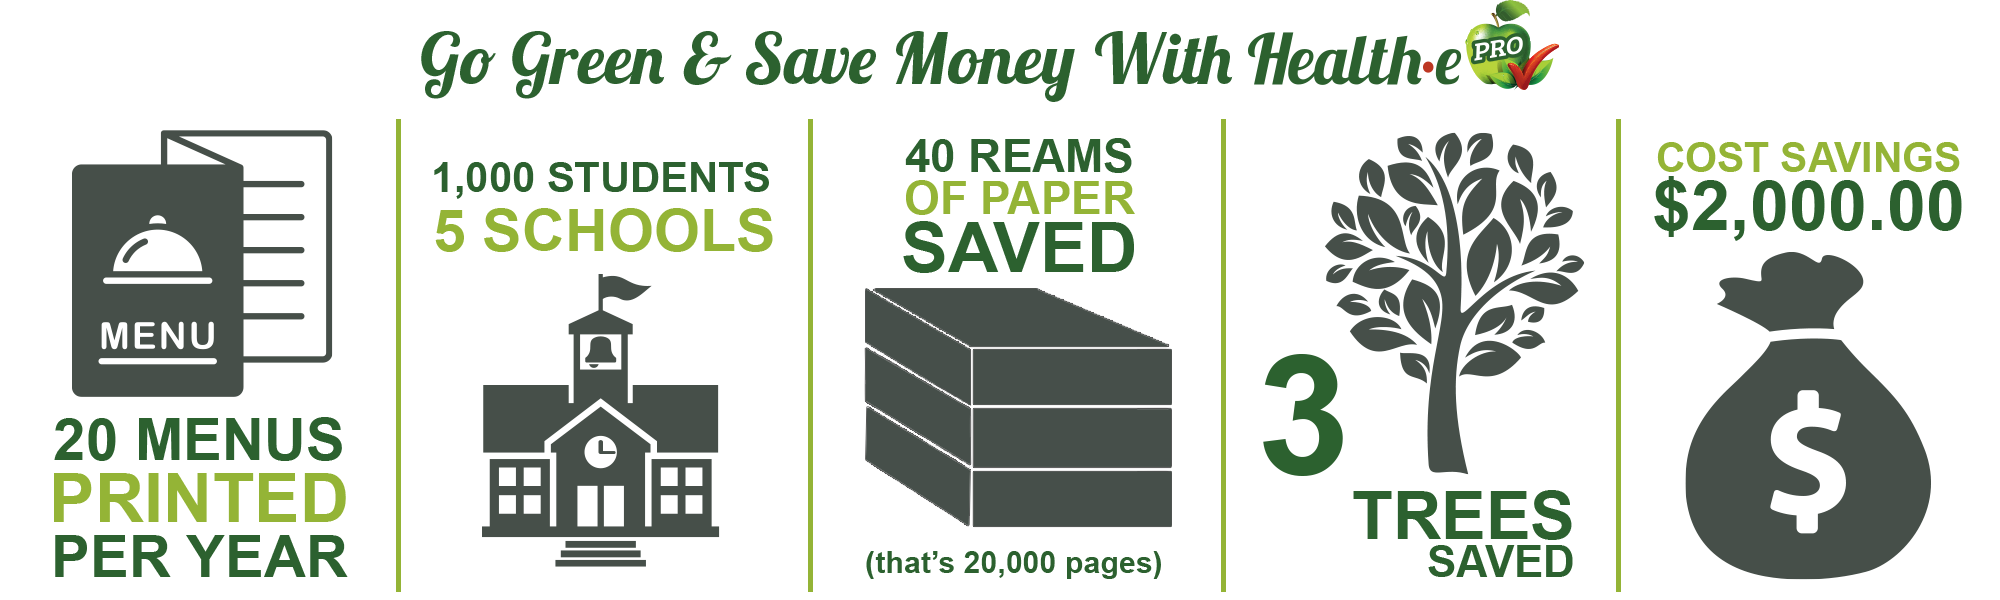 Paper Savings Calculator Health E Pro